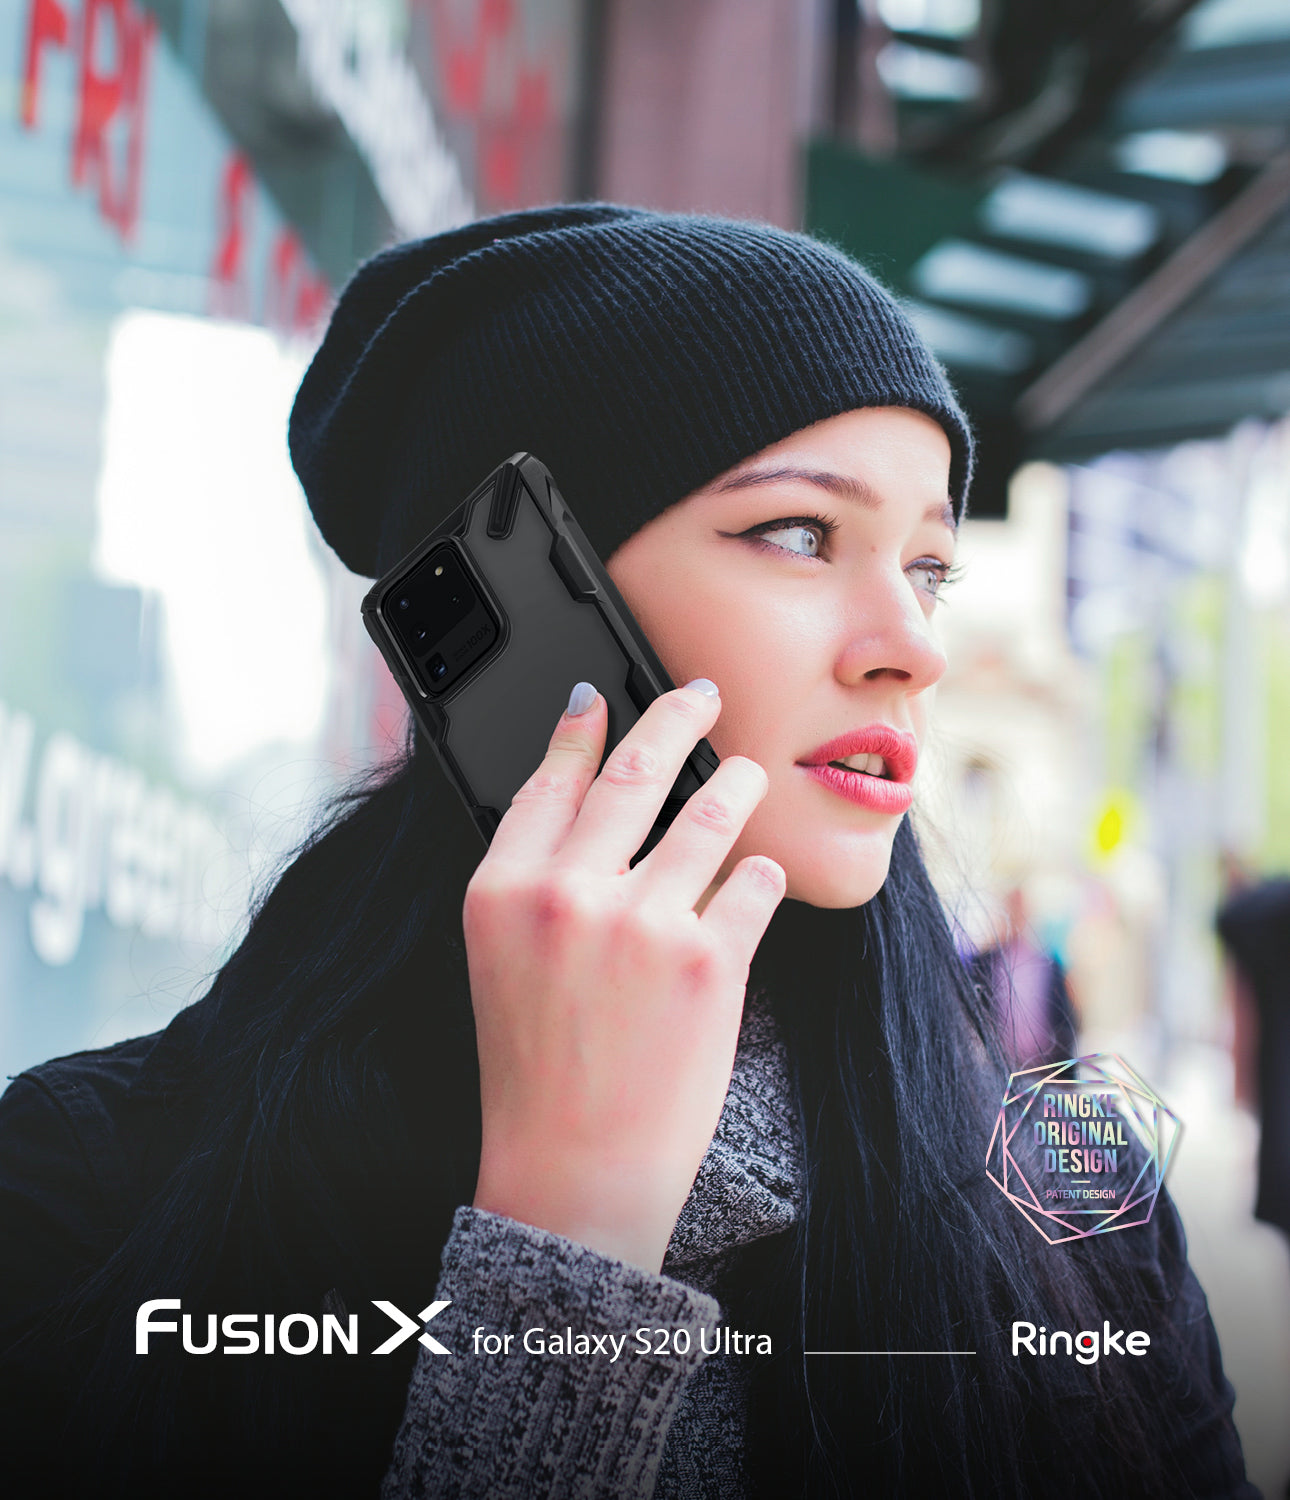 Ringke Fusion-X case for Samsung Galaxy S20 Ultra Camo Black, Black, Space Blue Colors